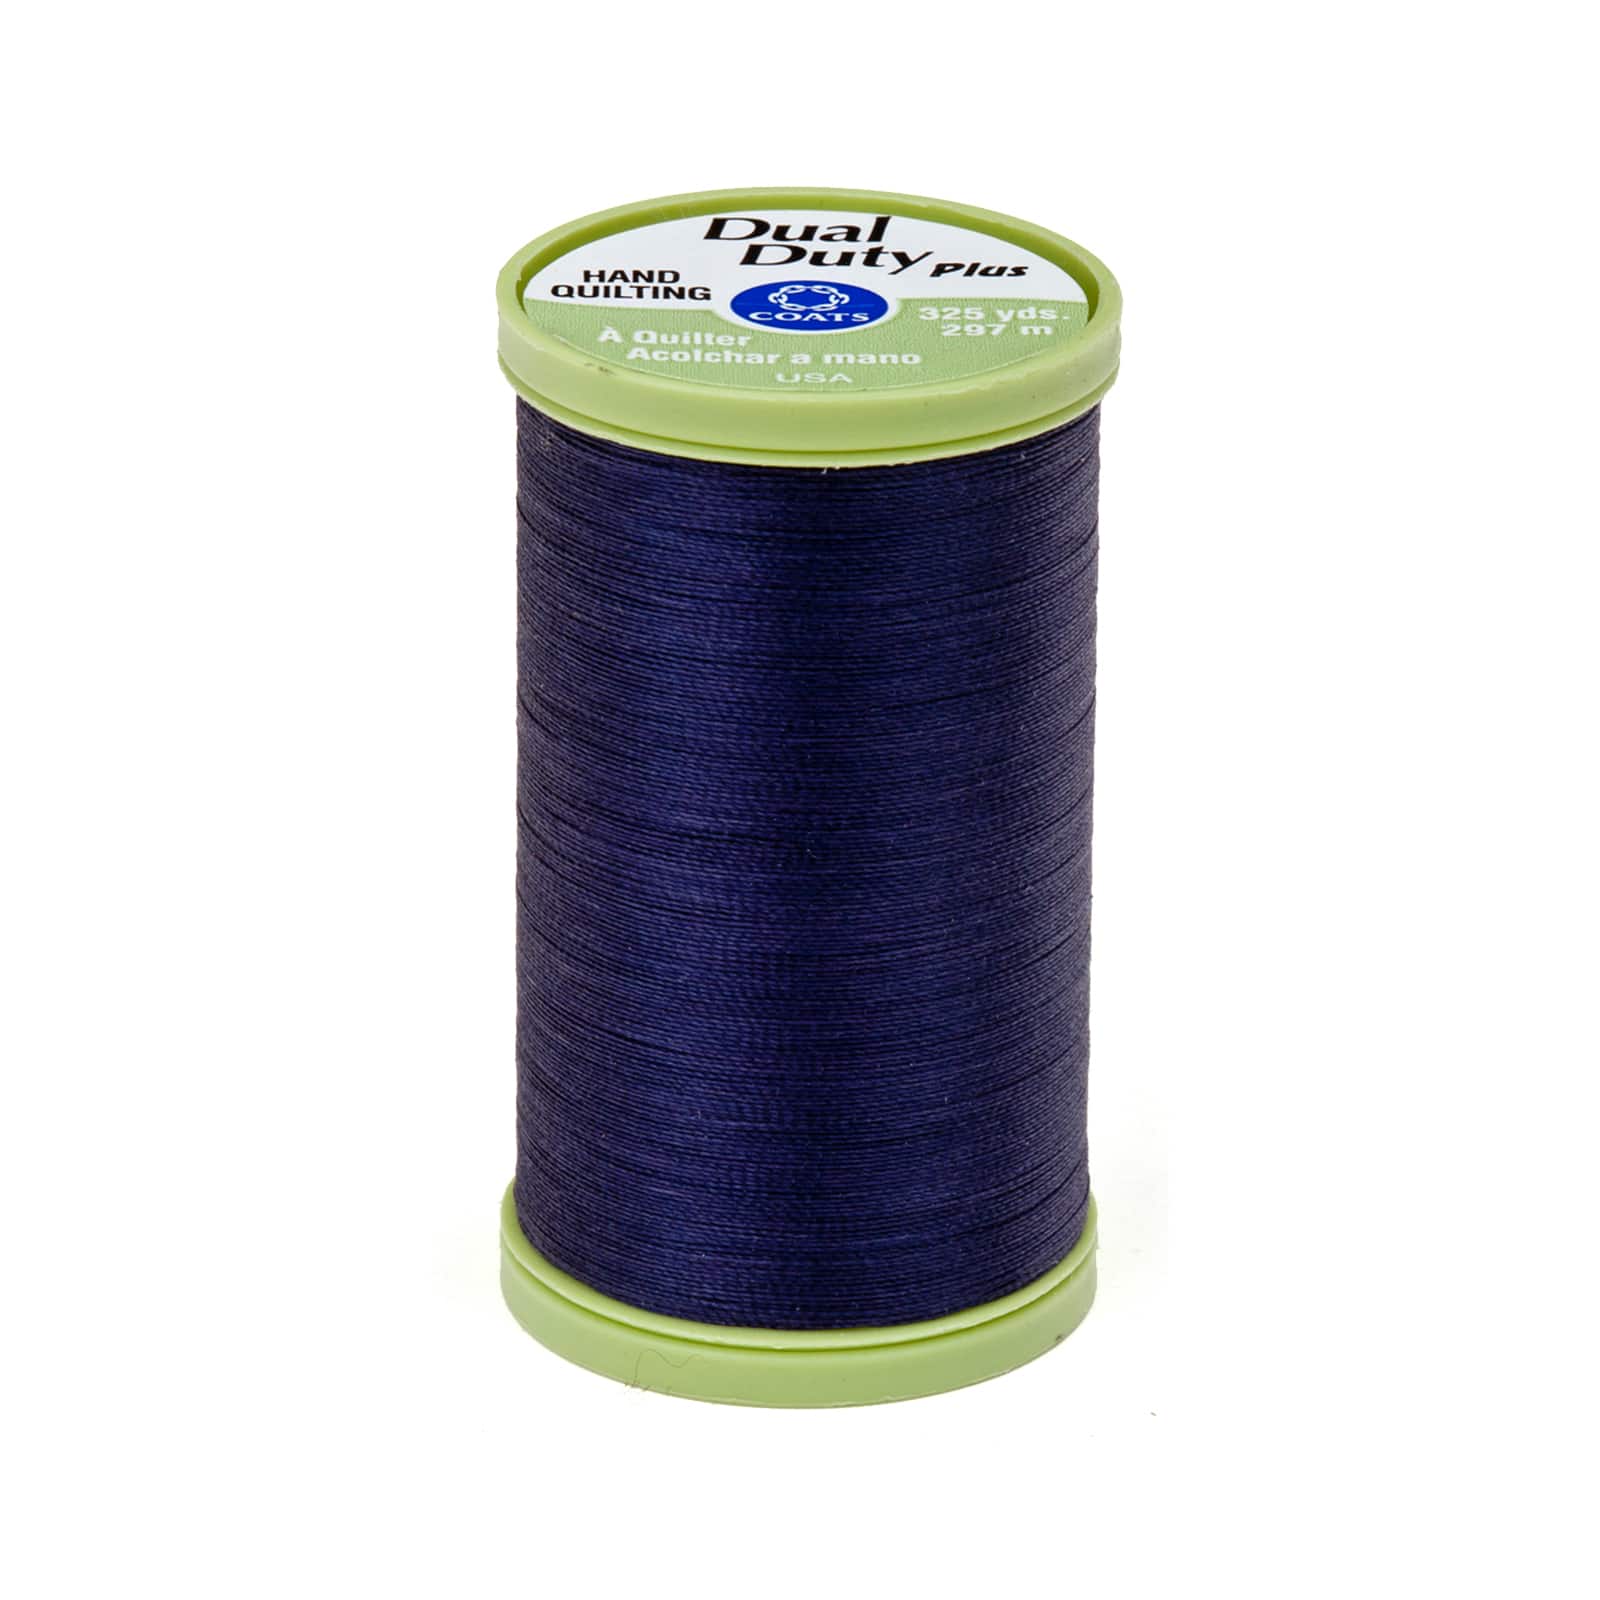 Loops & Threads™ Hand Sewing Thread Spools, Dark Colors